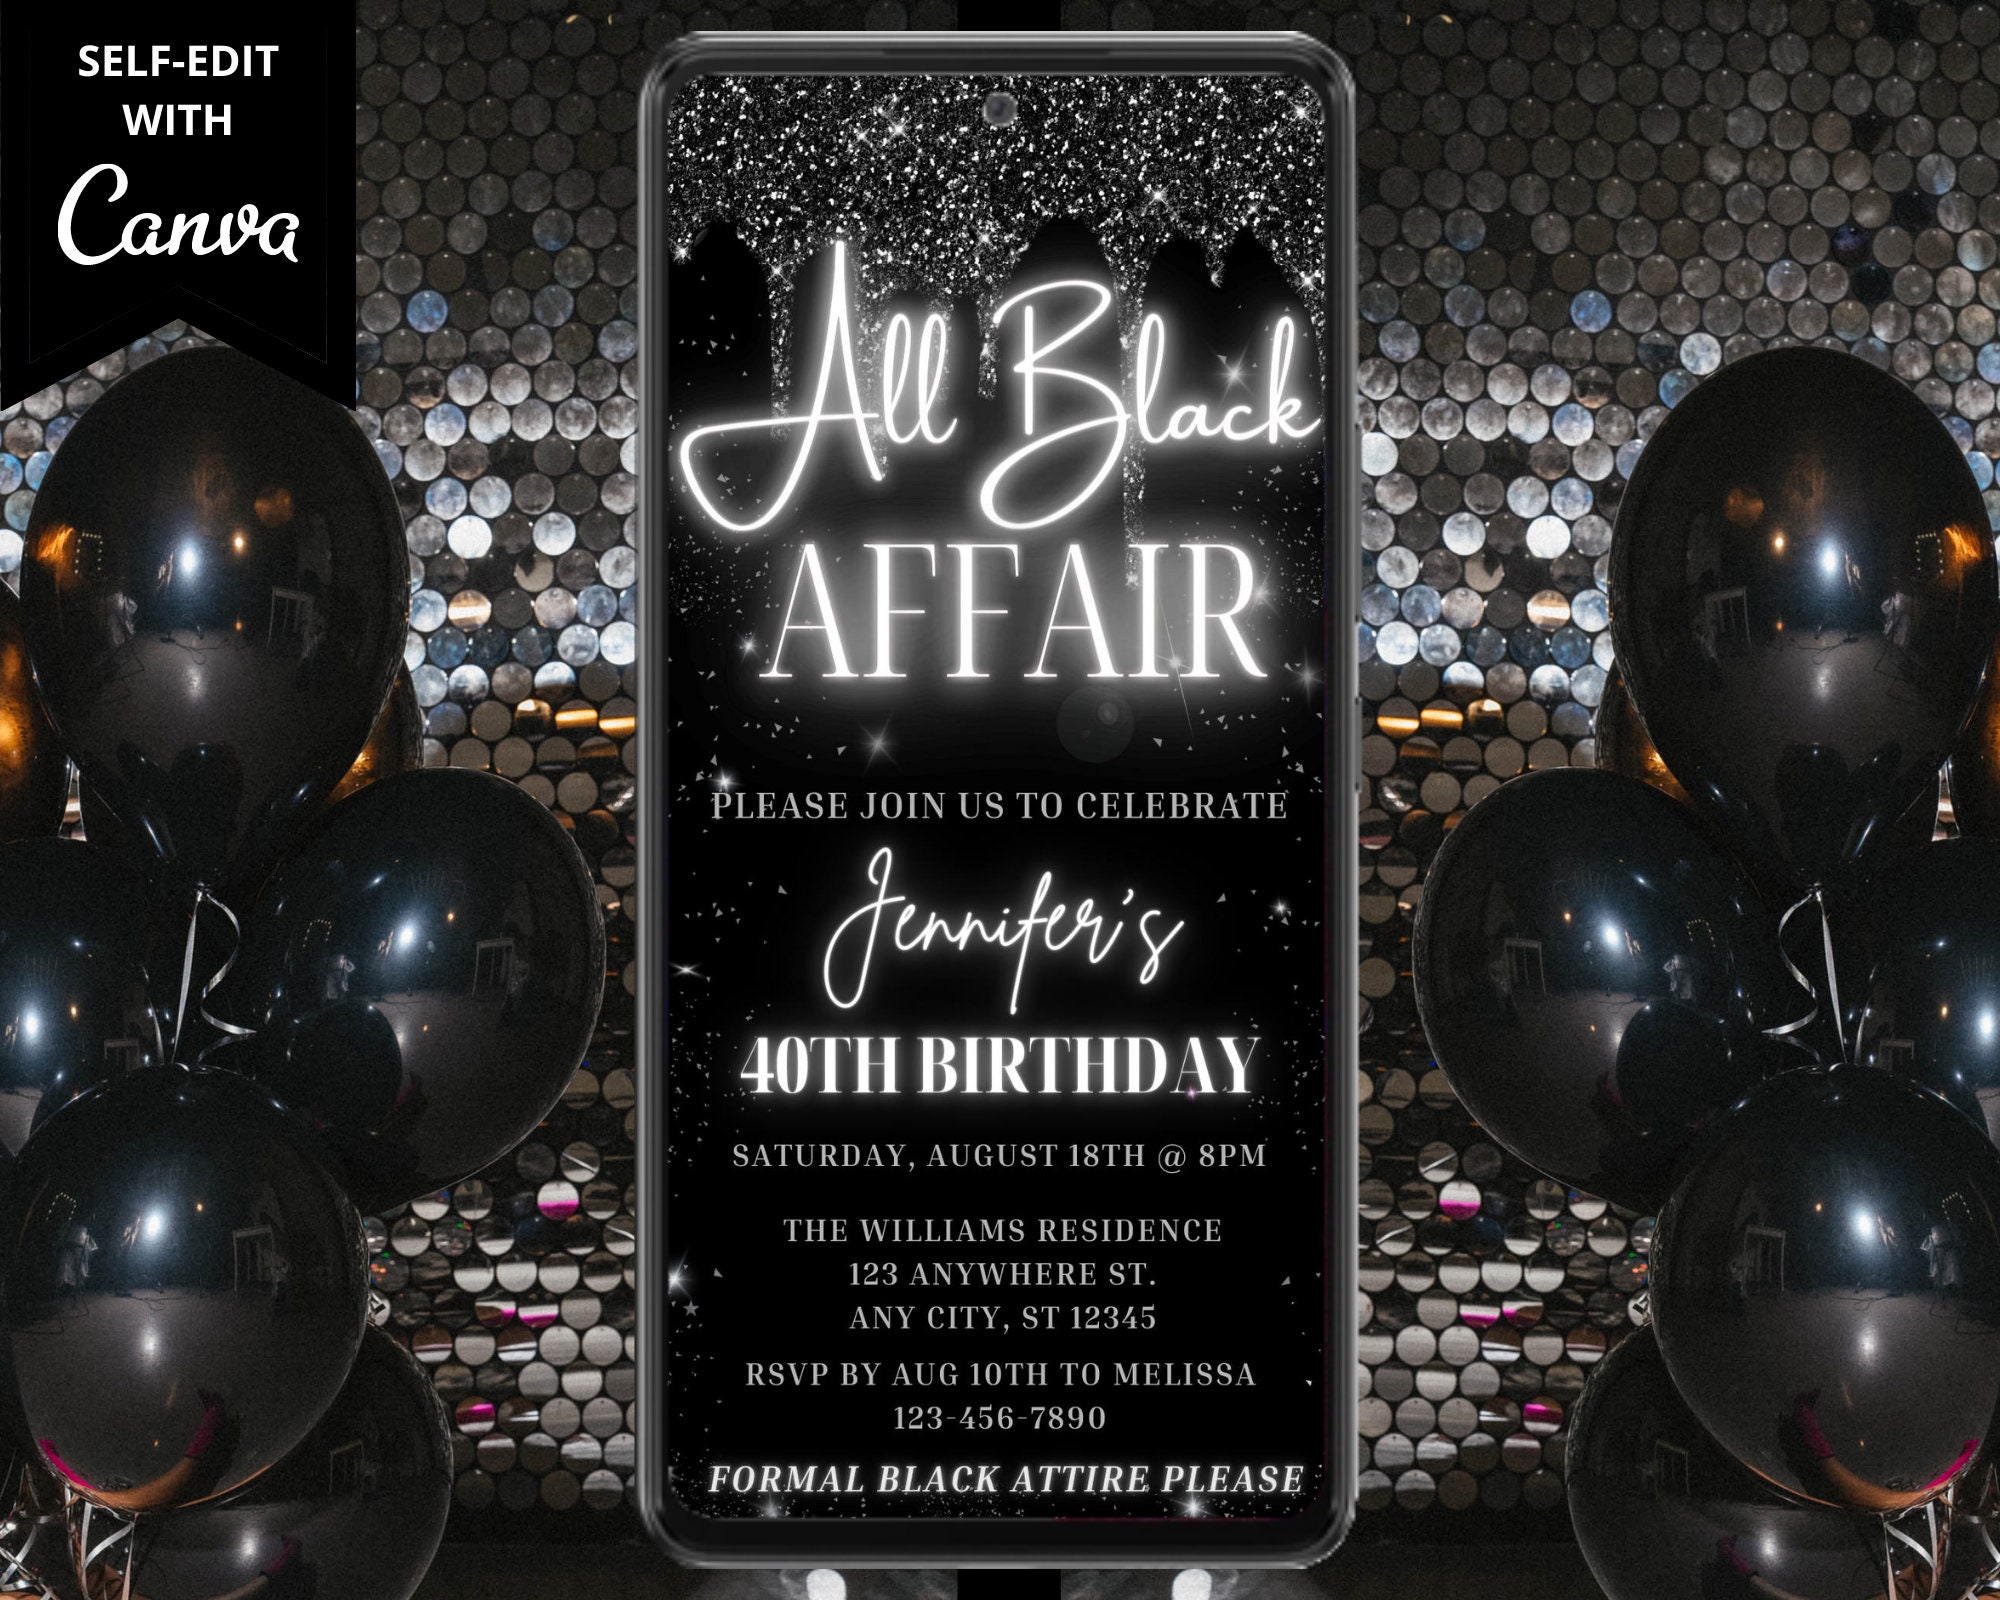 All Black Affair Birthday Party Decorations 